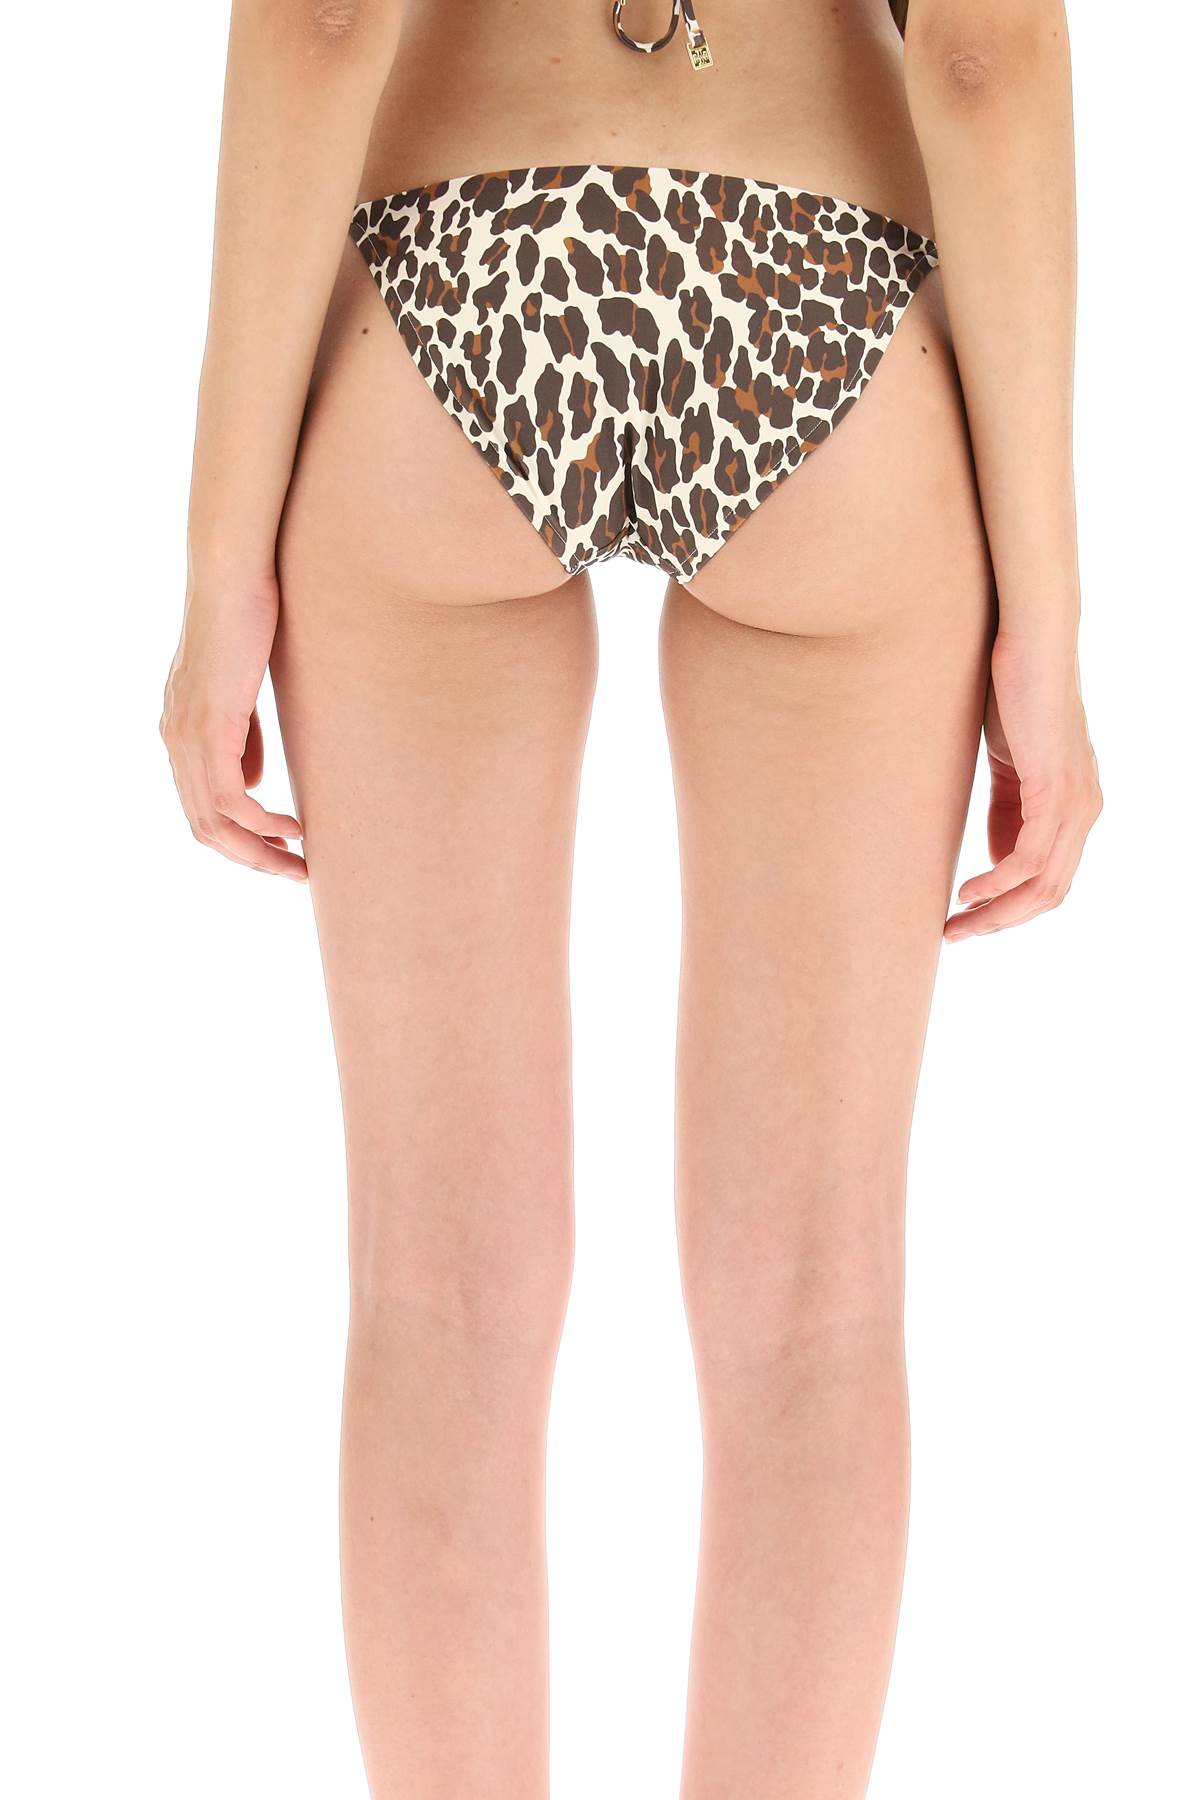 Tory Burch Tory burch leopard print bikini bottom